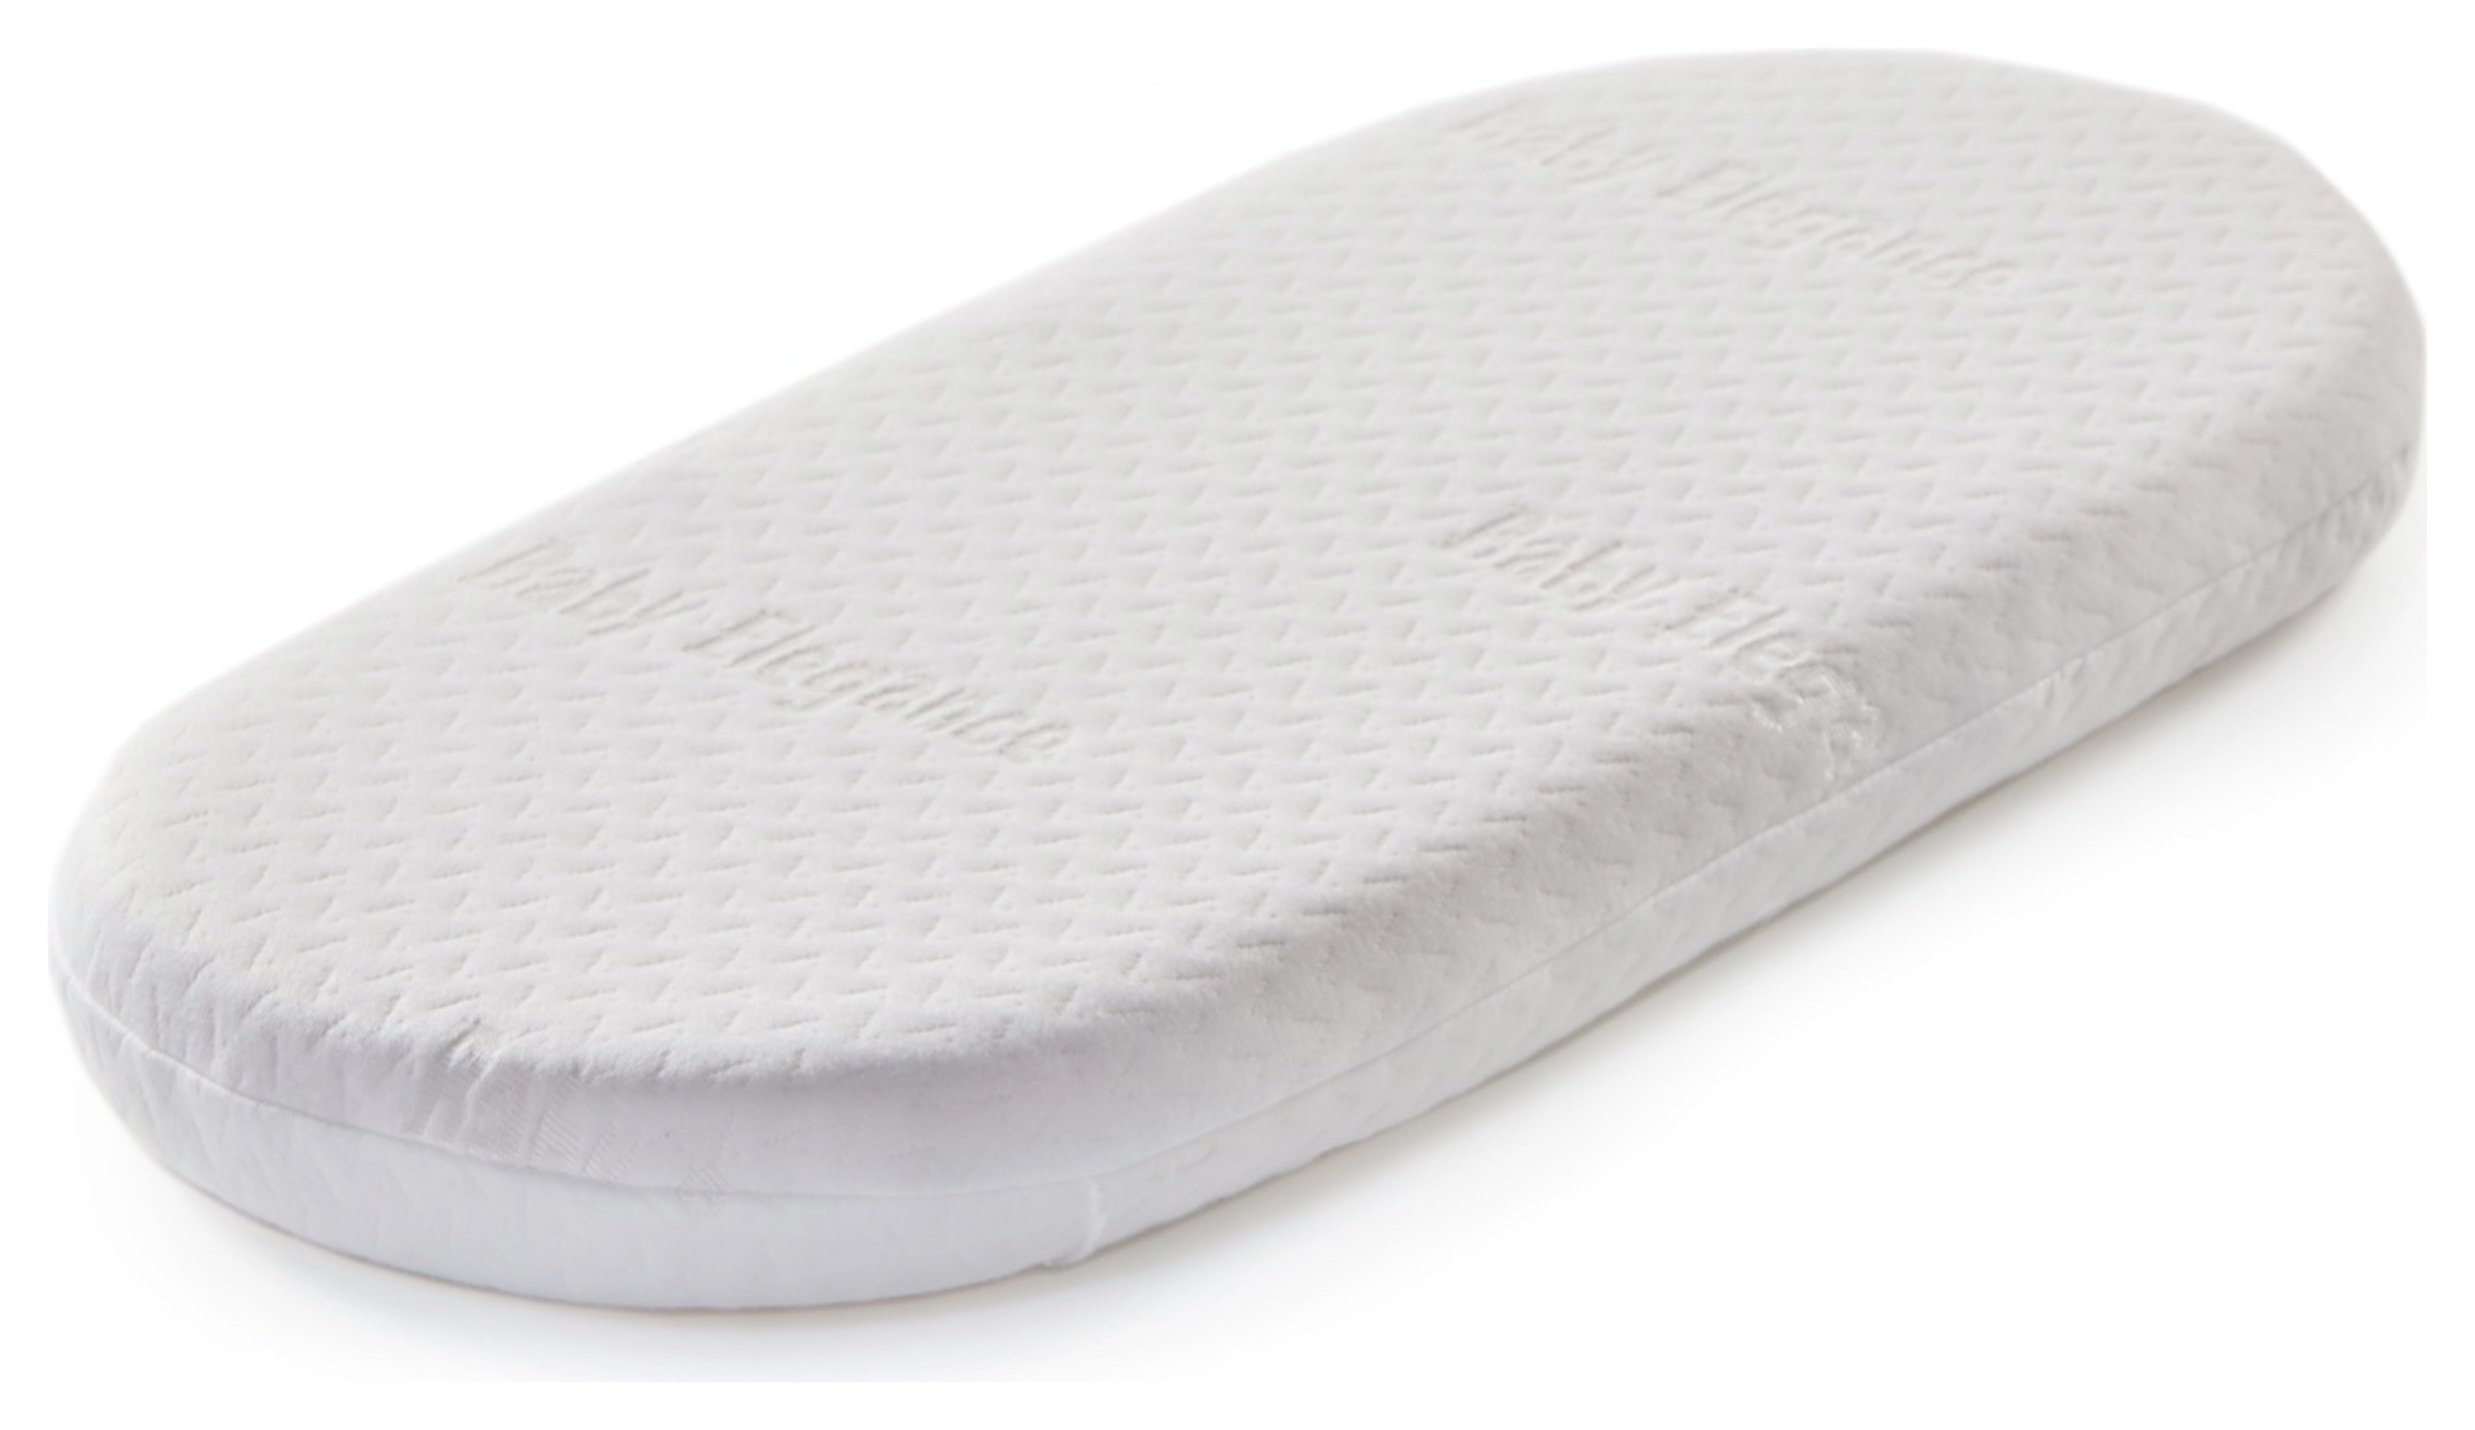 sleeplanner multipurpose memory foam mattress wedge pillow